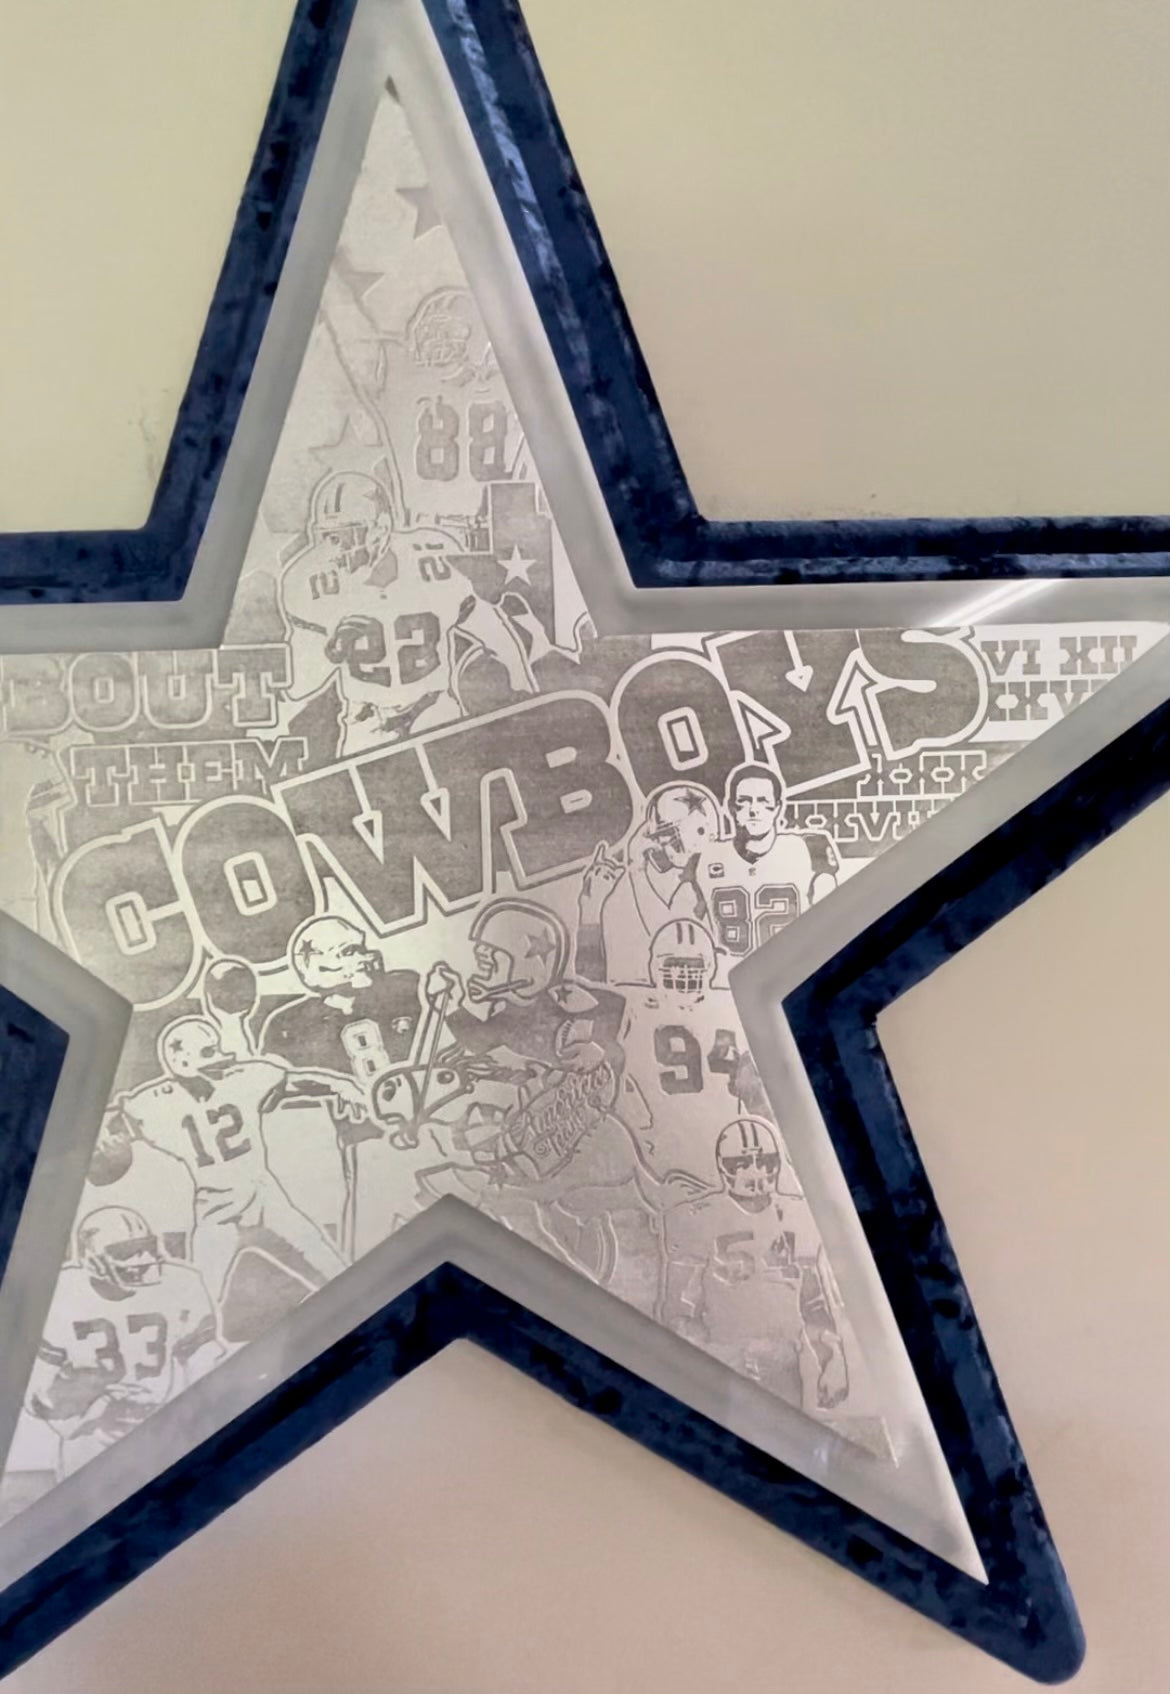 Dallas Cowboys LED sign